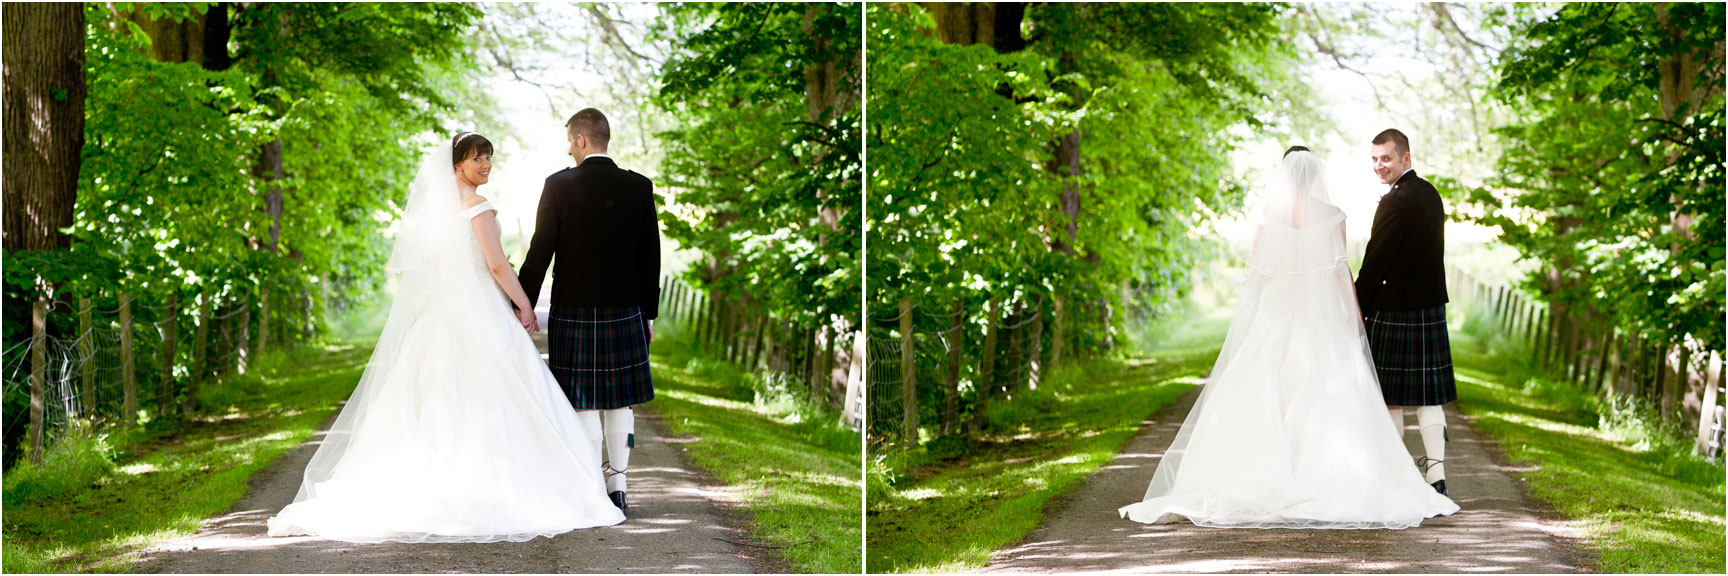 inverness-wedding-photographer